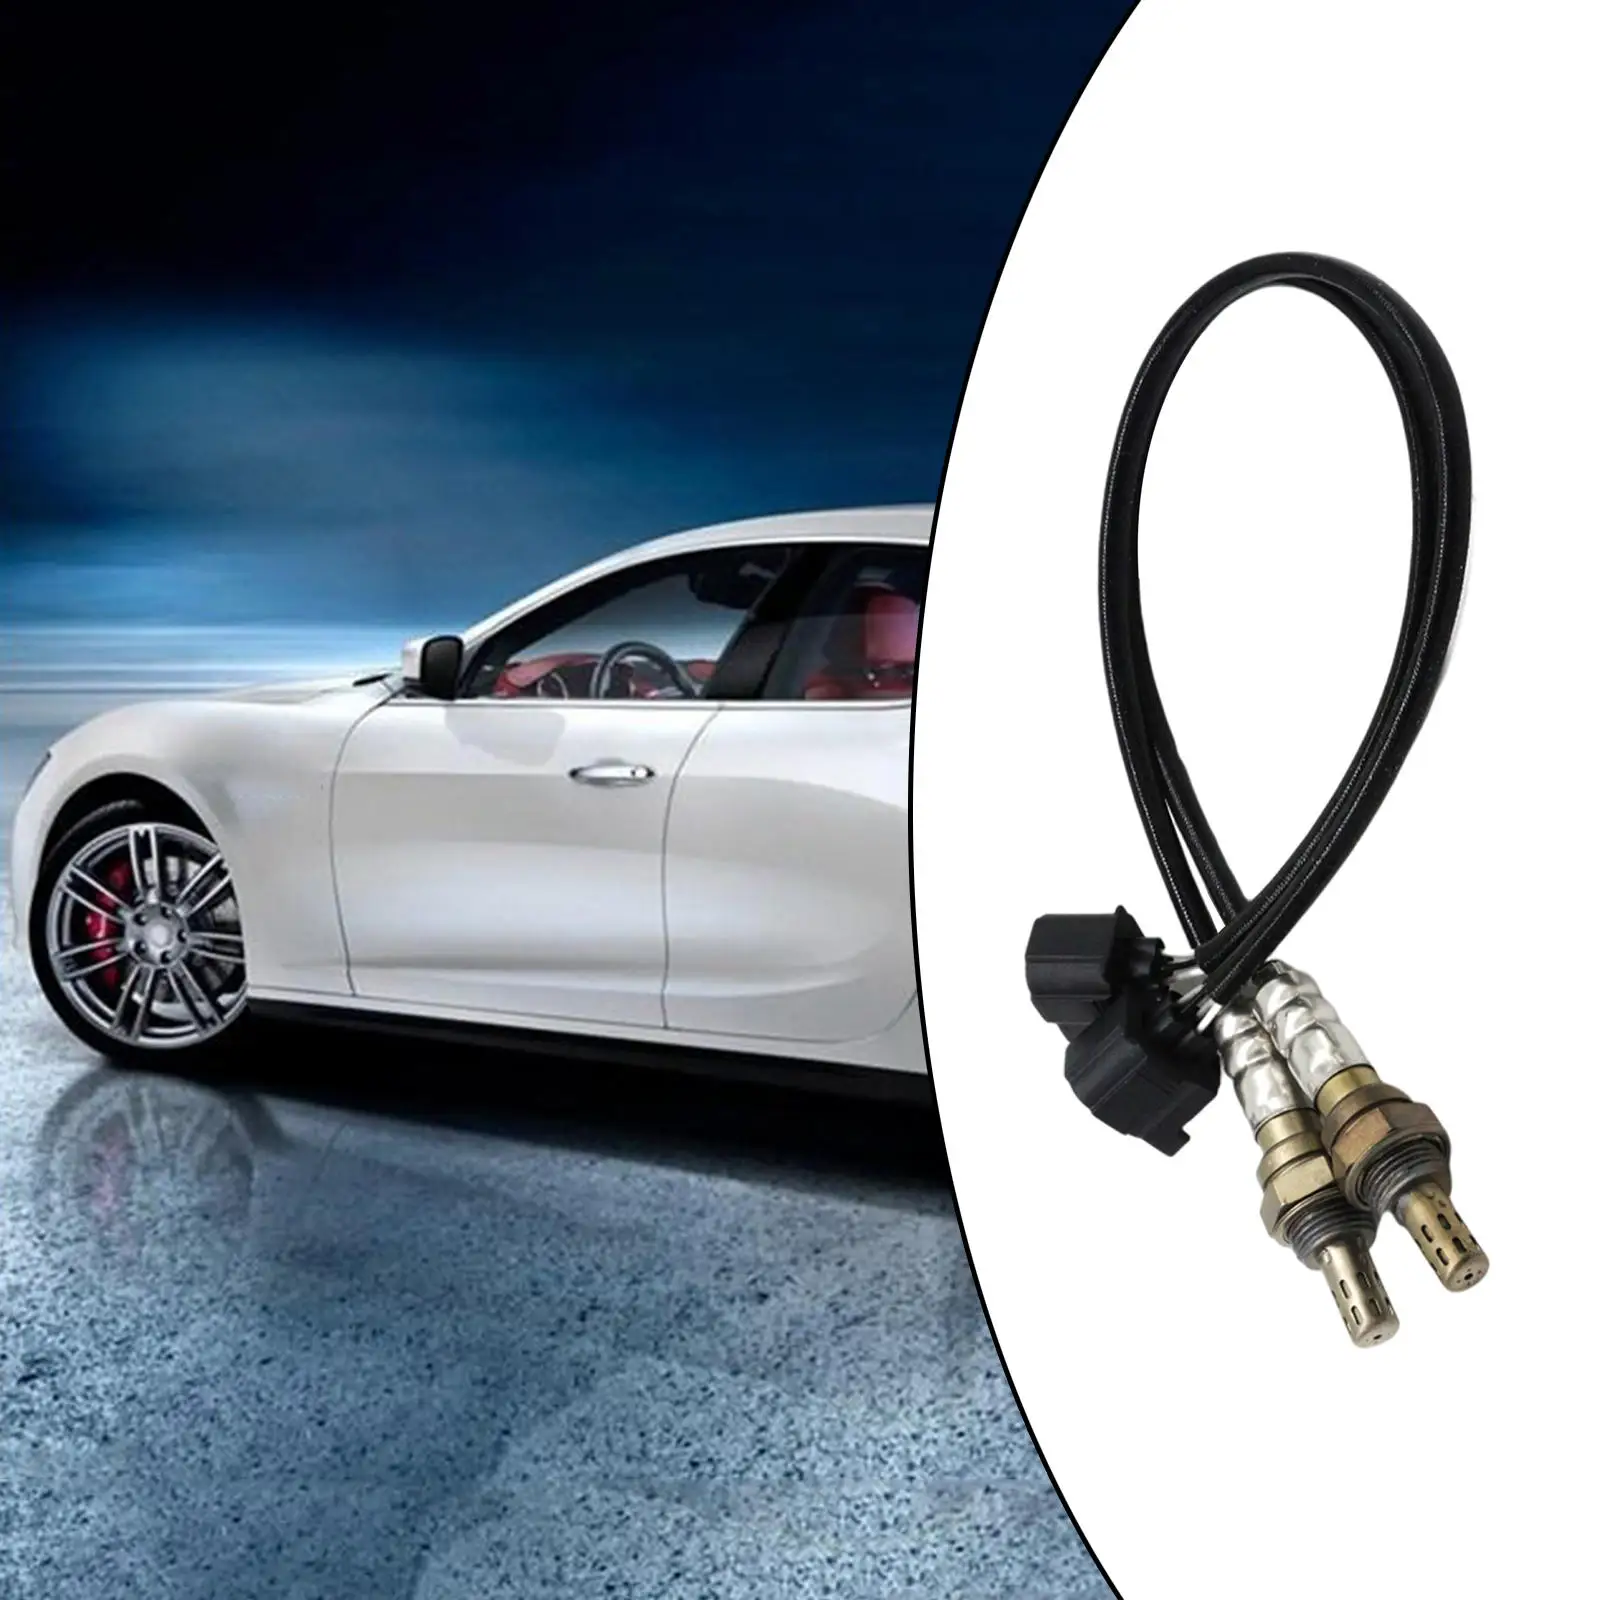 Car Auto Oxygen Sensor SG1849 Pair Set fits for Chrysler, Easy to Install